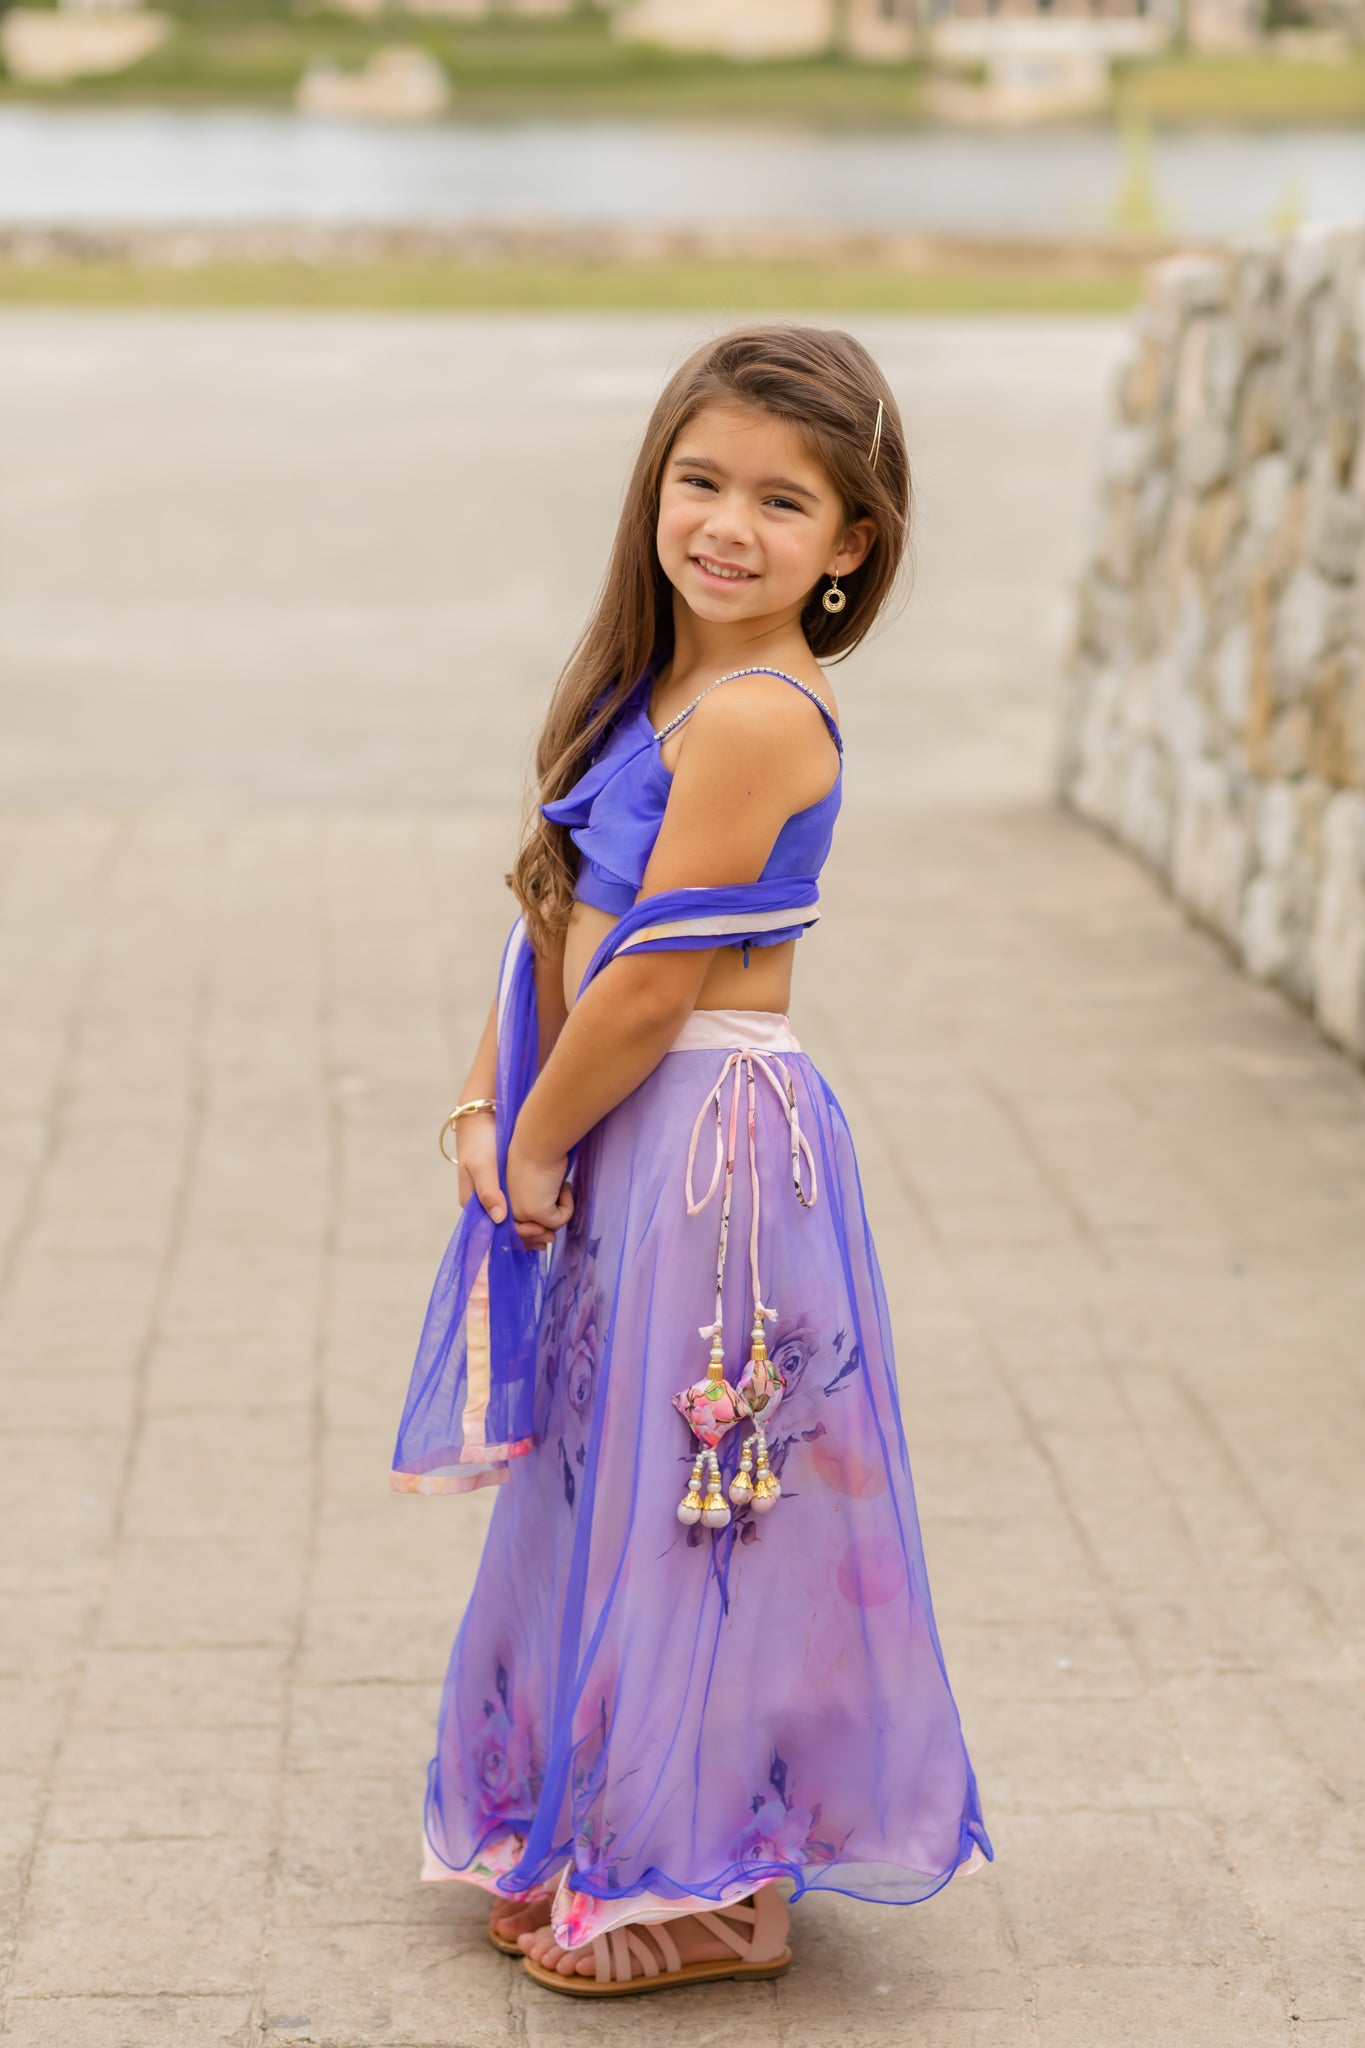 Radha Garba Lehenga Choli Kids Fancy Dress Costume For Girls With Jewellery  - Premium - Multicolor, Kids Dance Costume, बच्चों के नृत्य के कपड़े -  Bookmycostume, New Delhi | ID: 26135574033